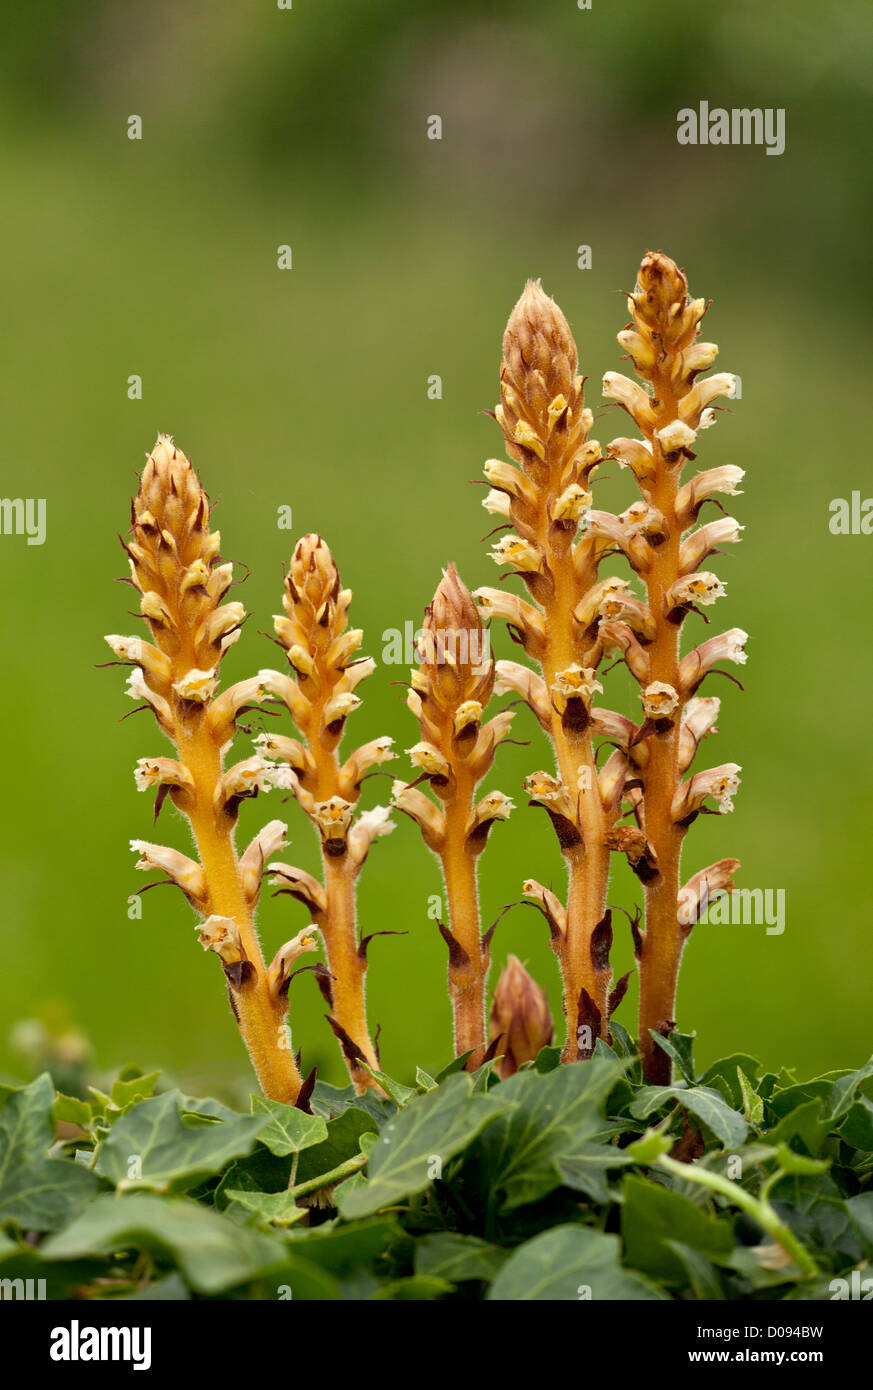 Ivy Succhiamele prataiolo (Orobanche hederae) sul parassita ivy, close-up Foto Stock